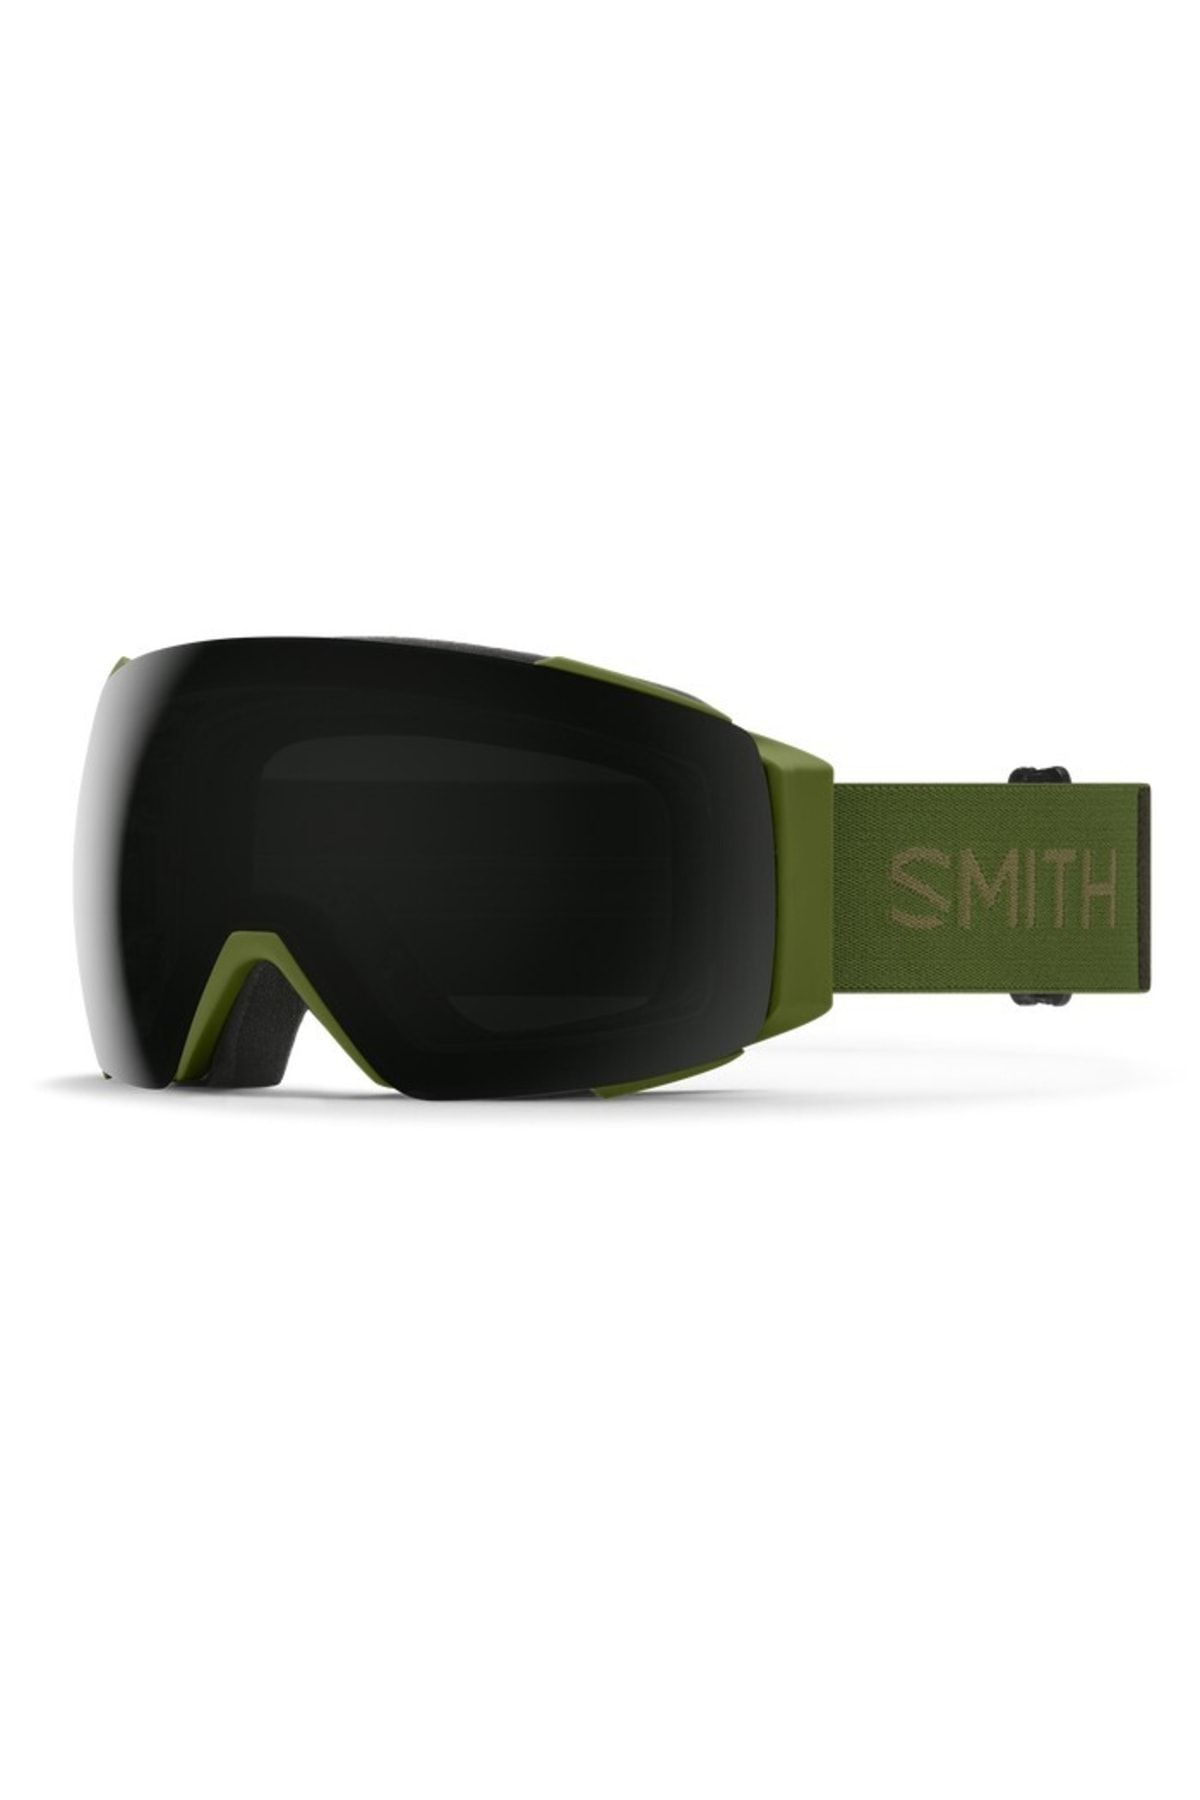 Smith Optics Smith I/o Mag Goggle (+bonus Lens)